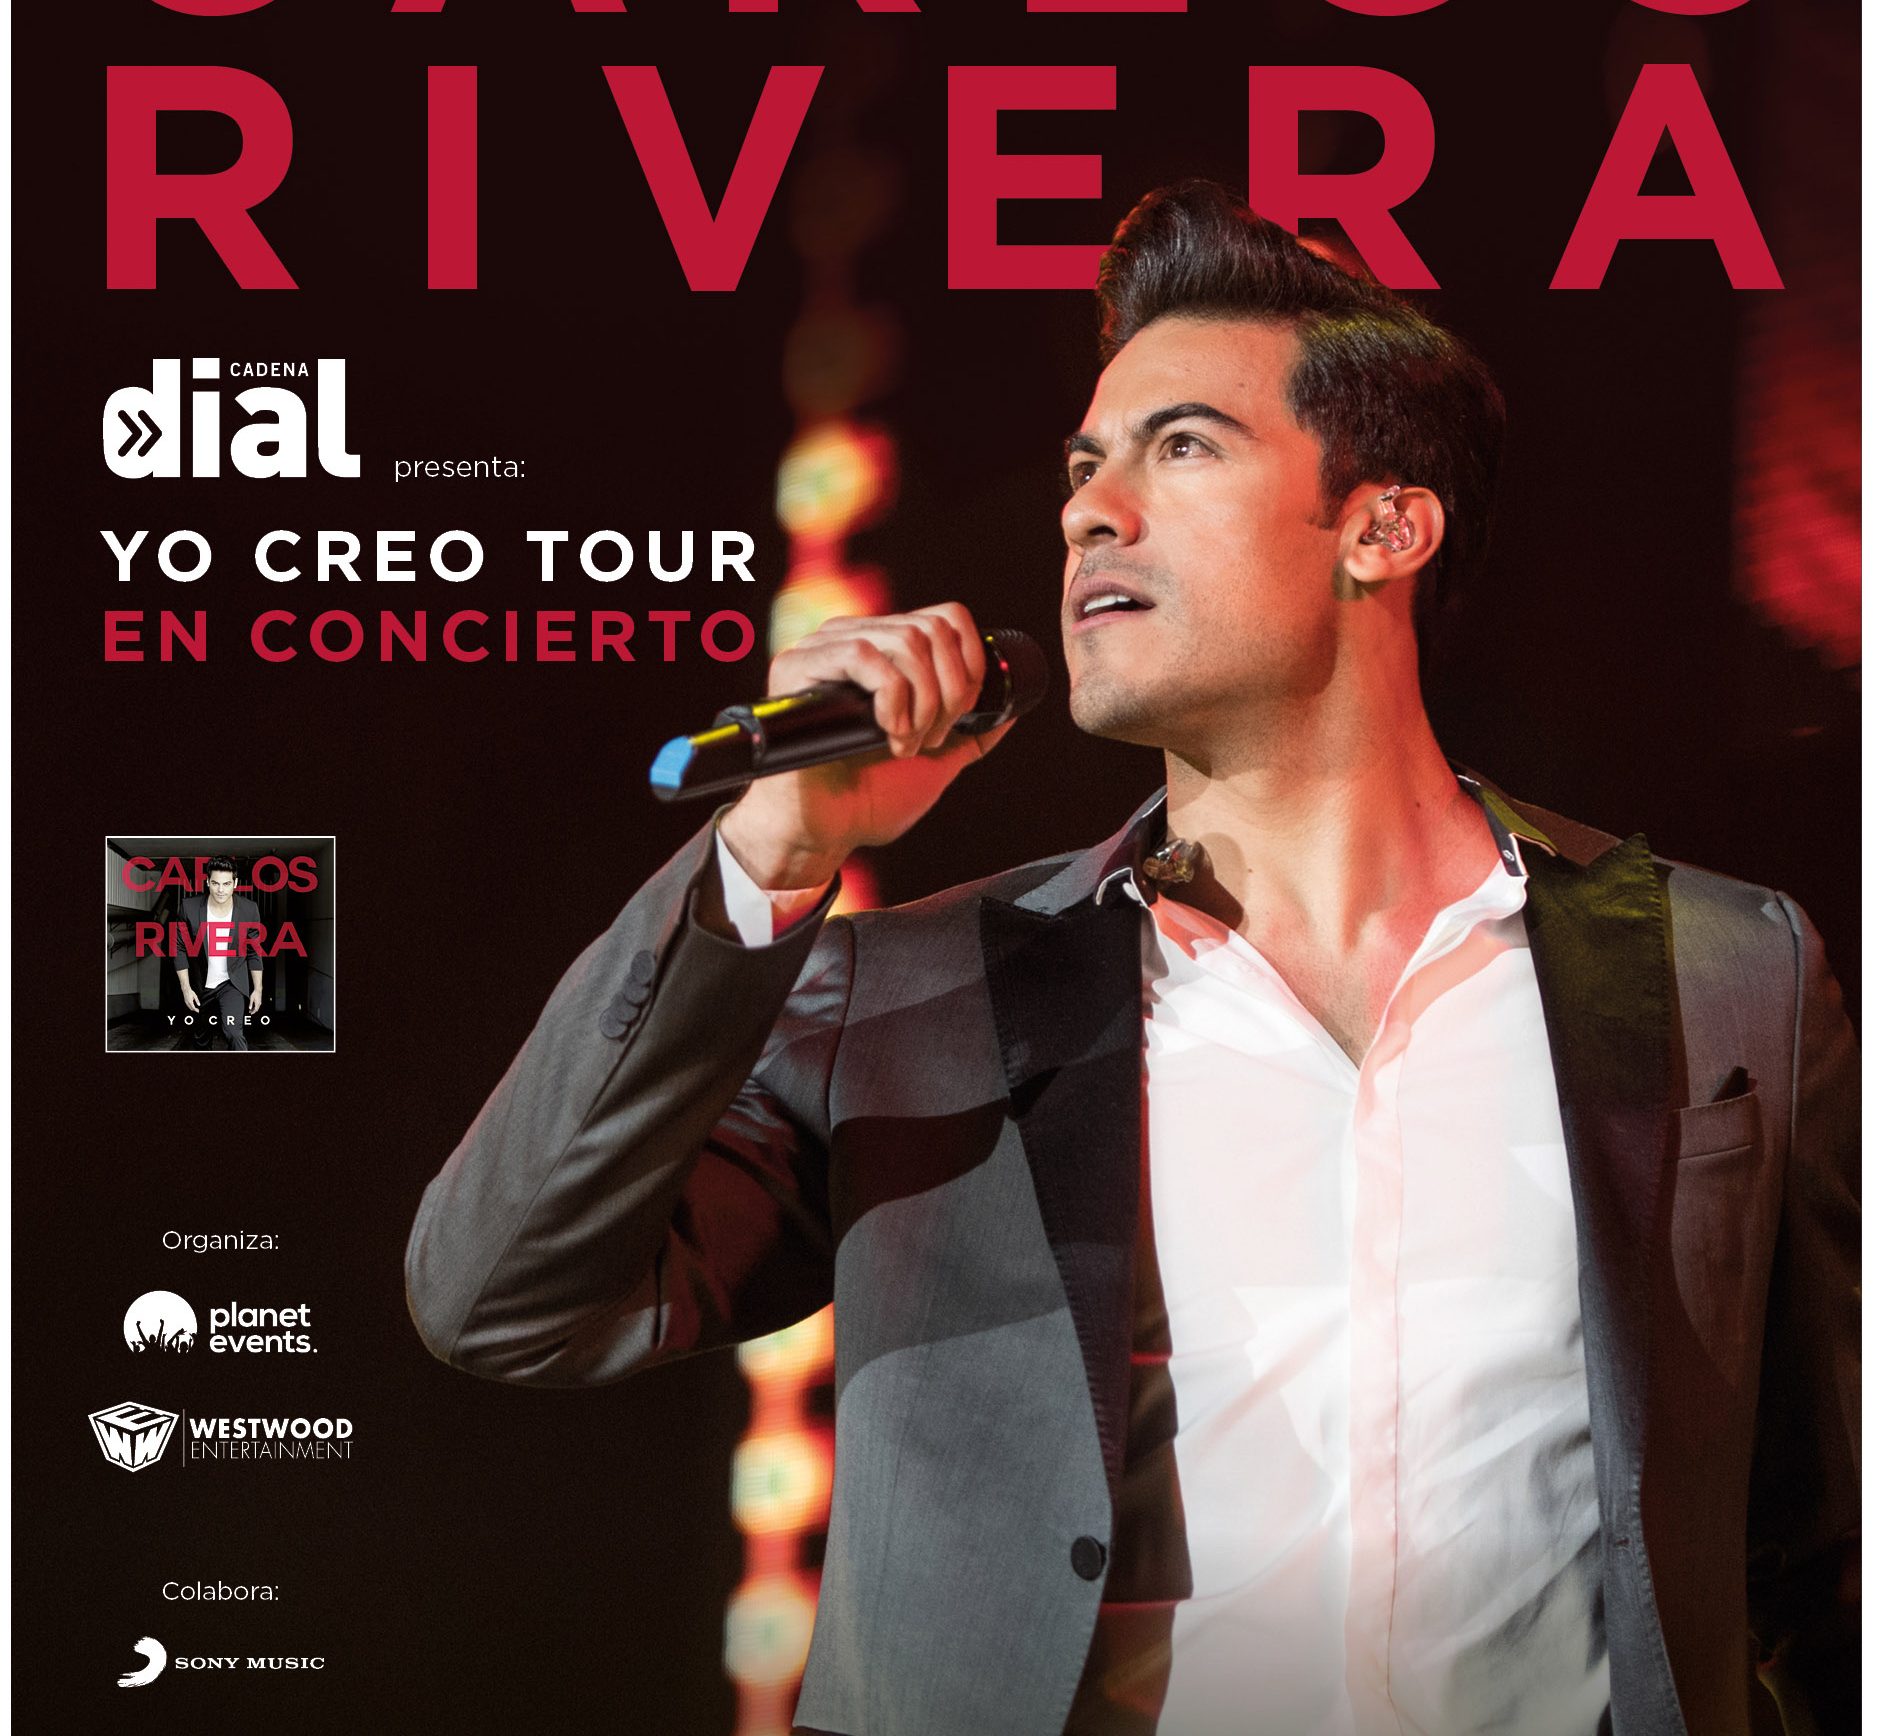 ¡Carlos Rivera regresa a Madrid con "Yo creo tour"!